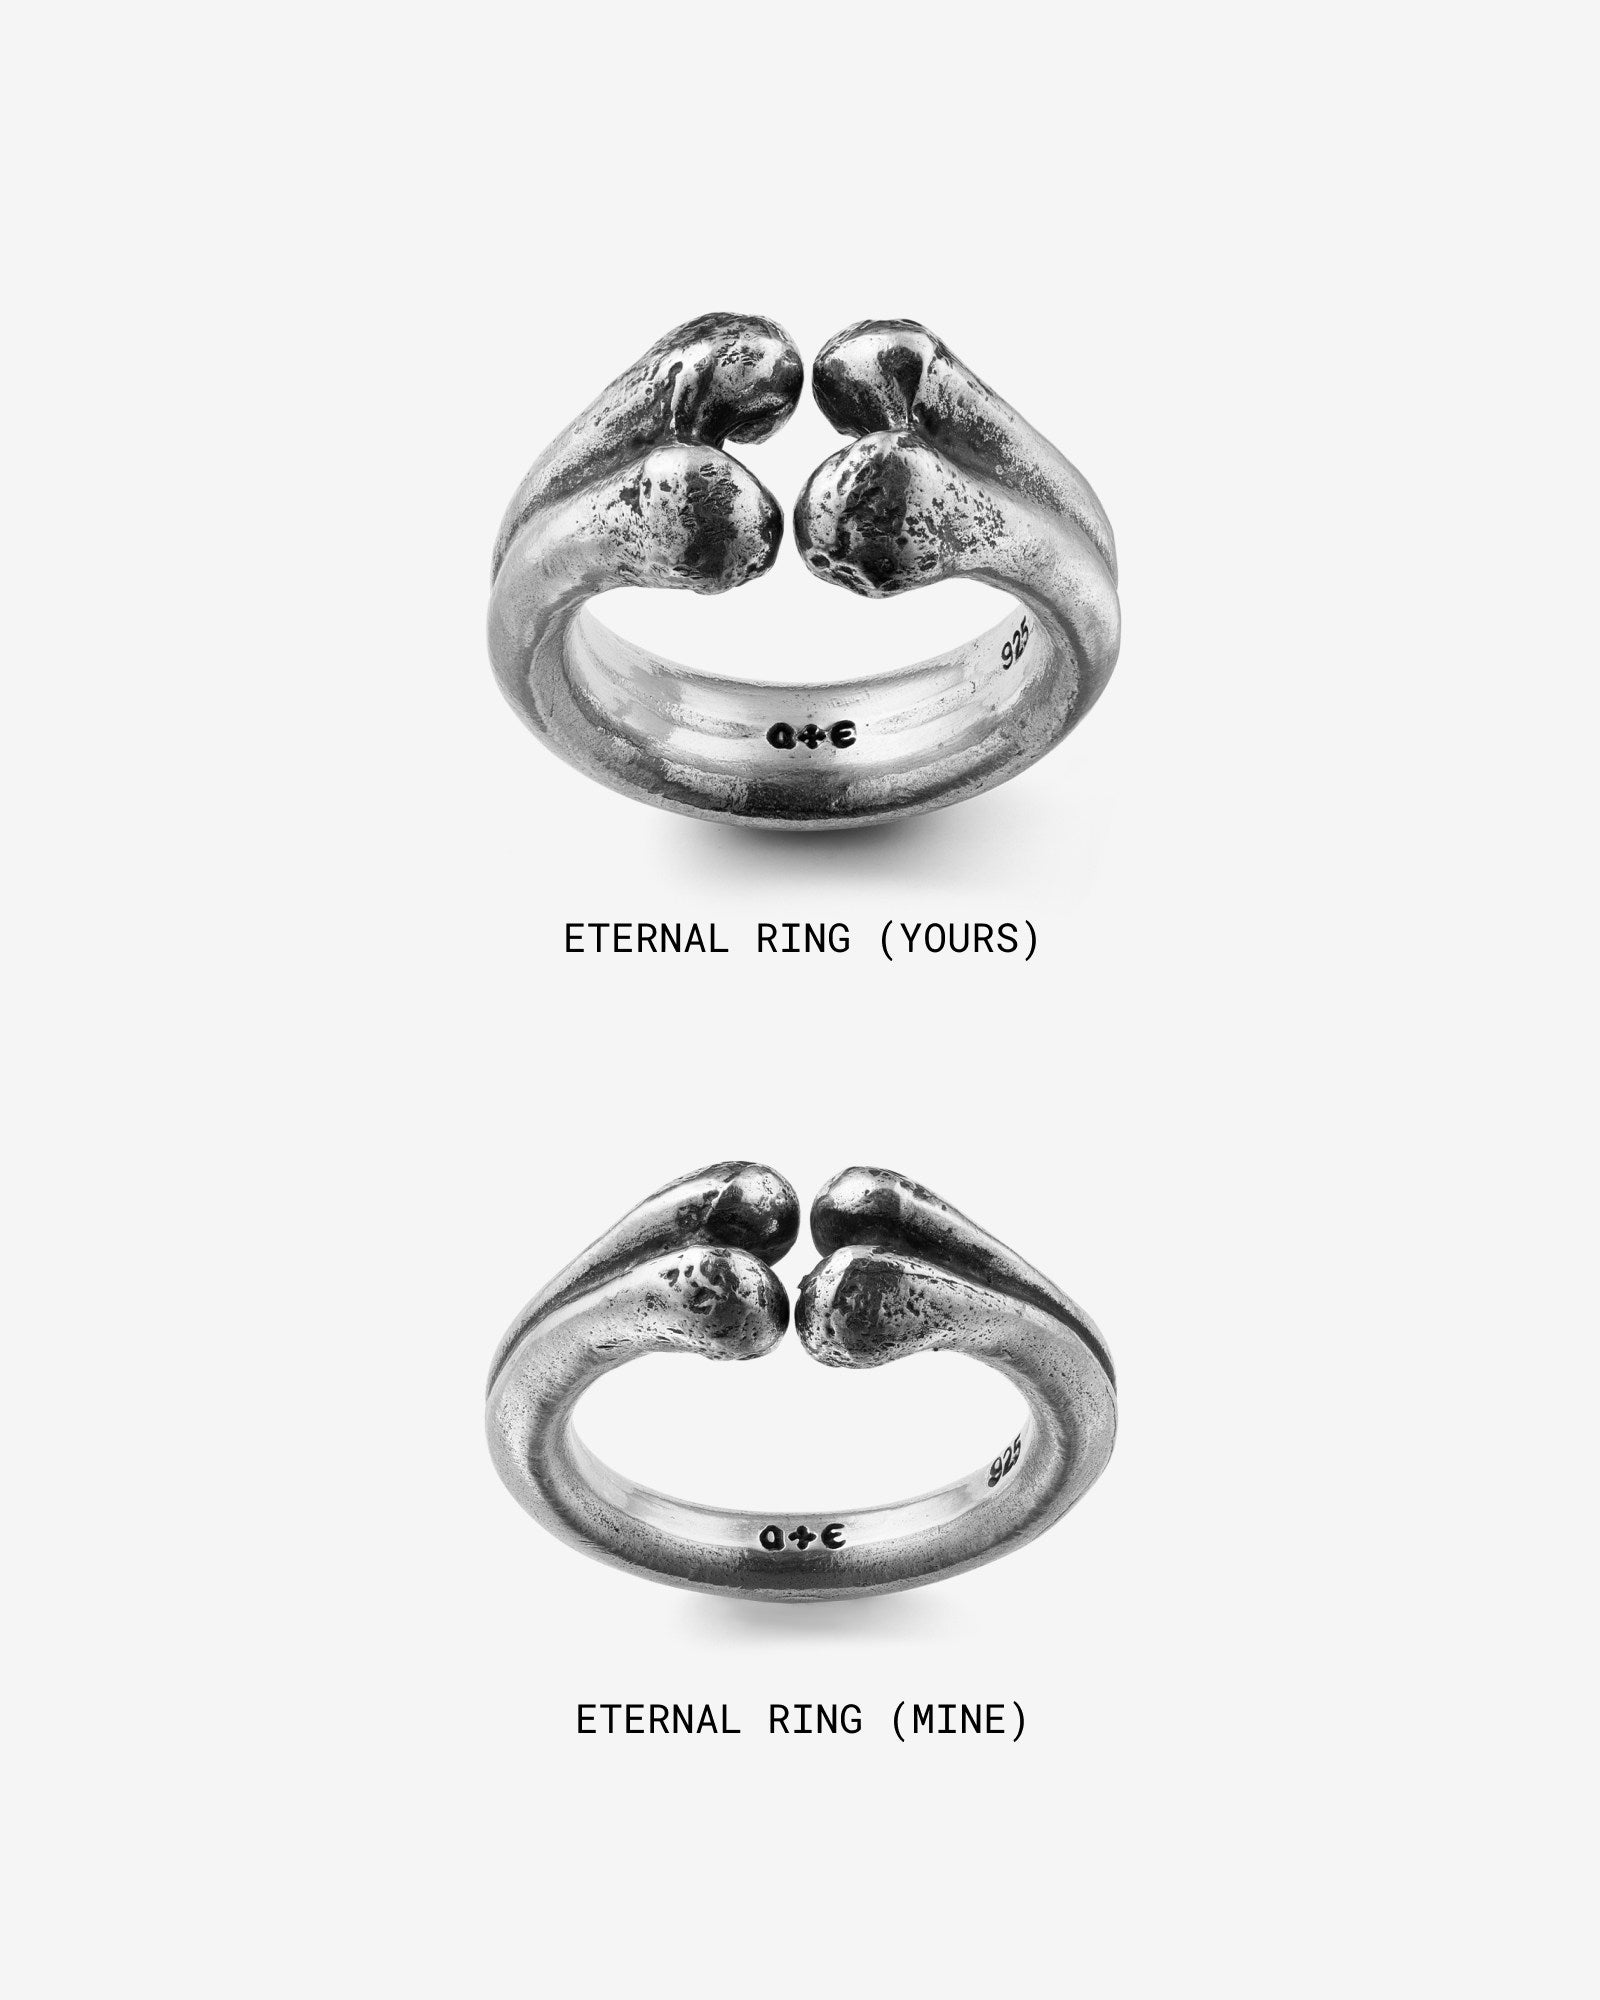 Harlequin Belt Ring in US6 - Alternative Rings by Ask & Embla